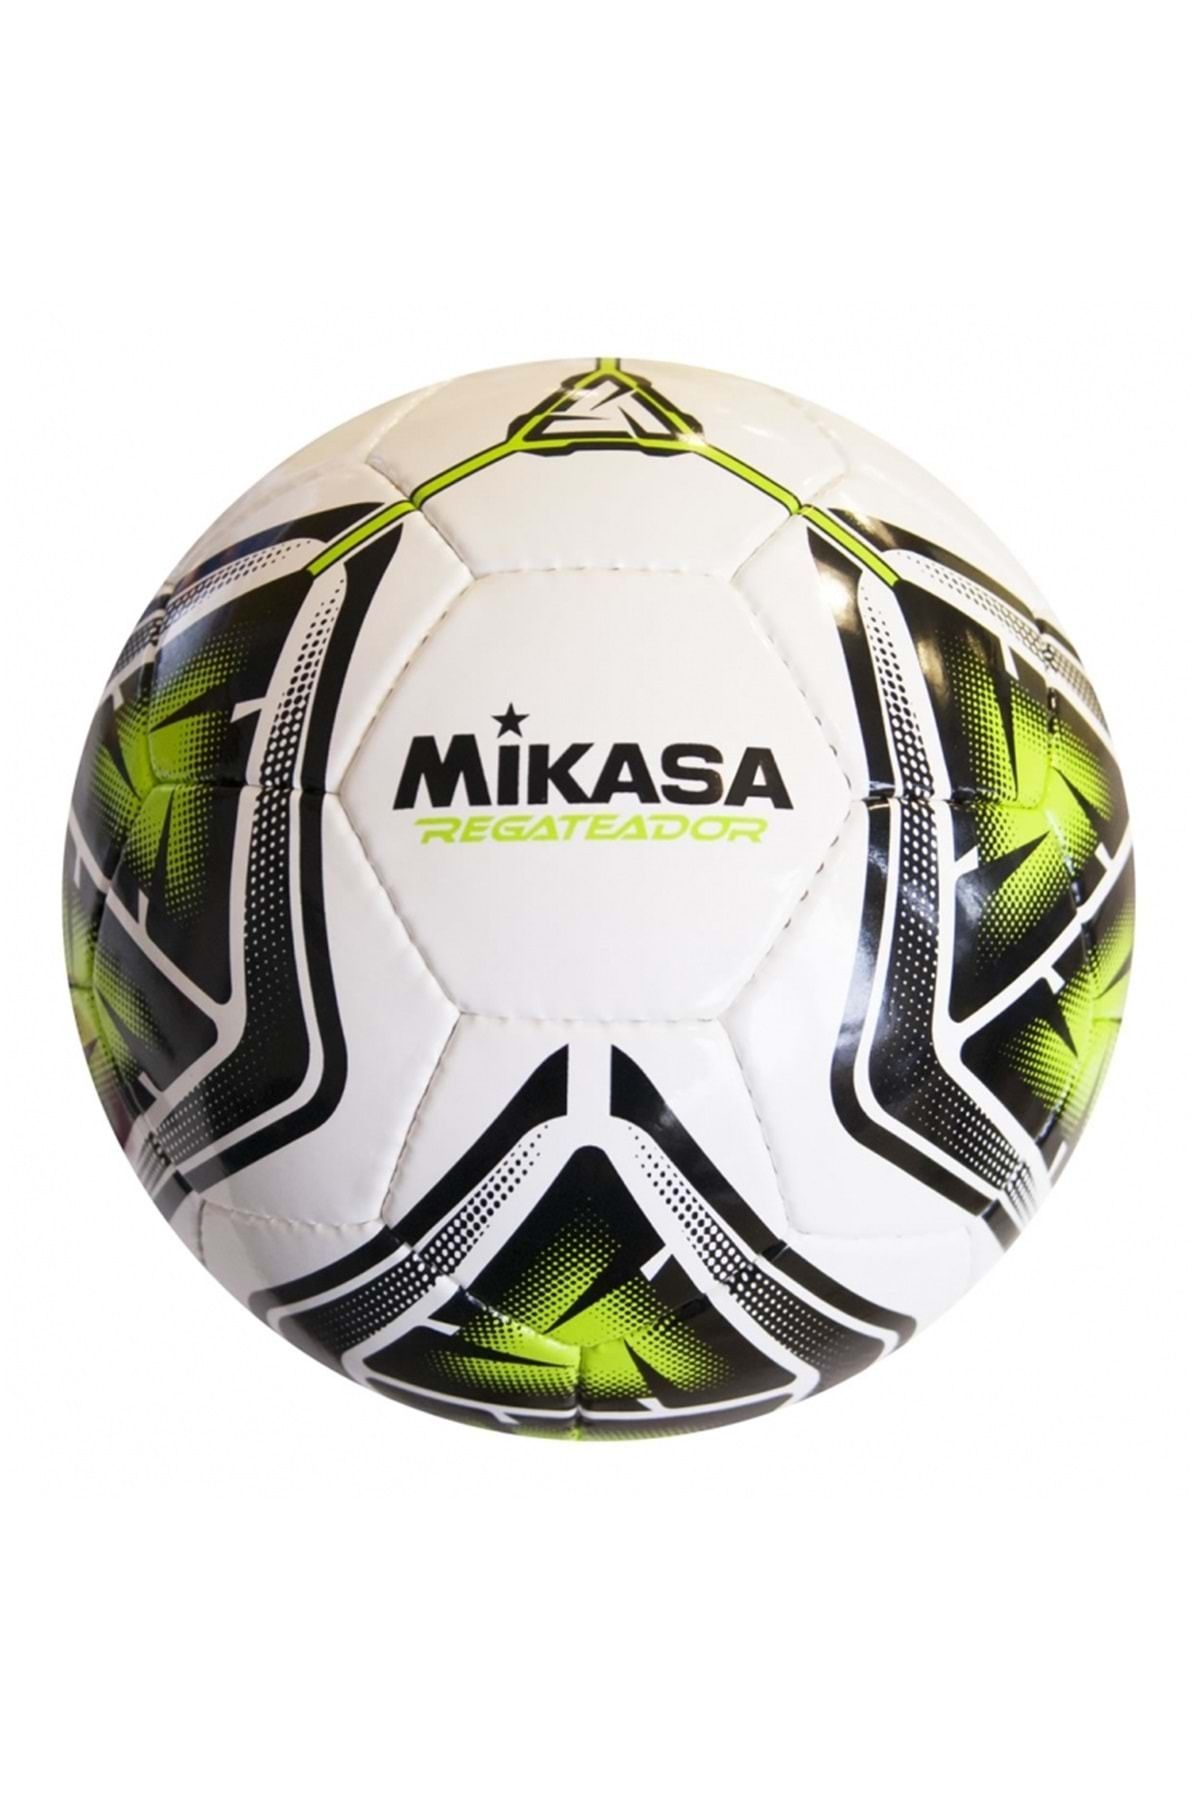 MIKASA Regateador 5 Numara El Dikişli Halı Saha Futbol Topu Yeşil